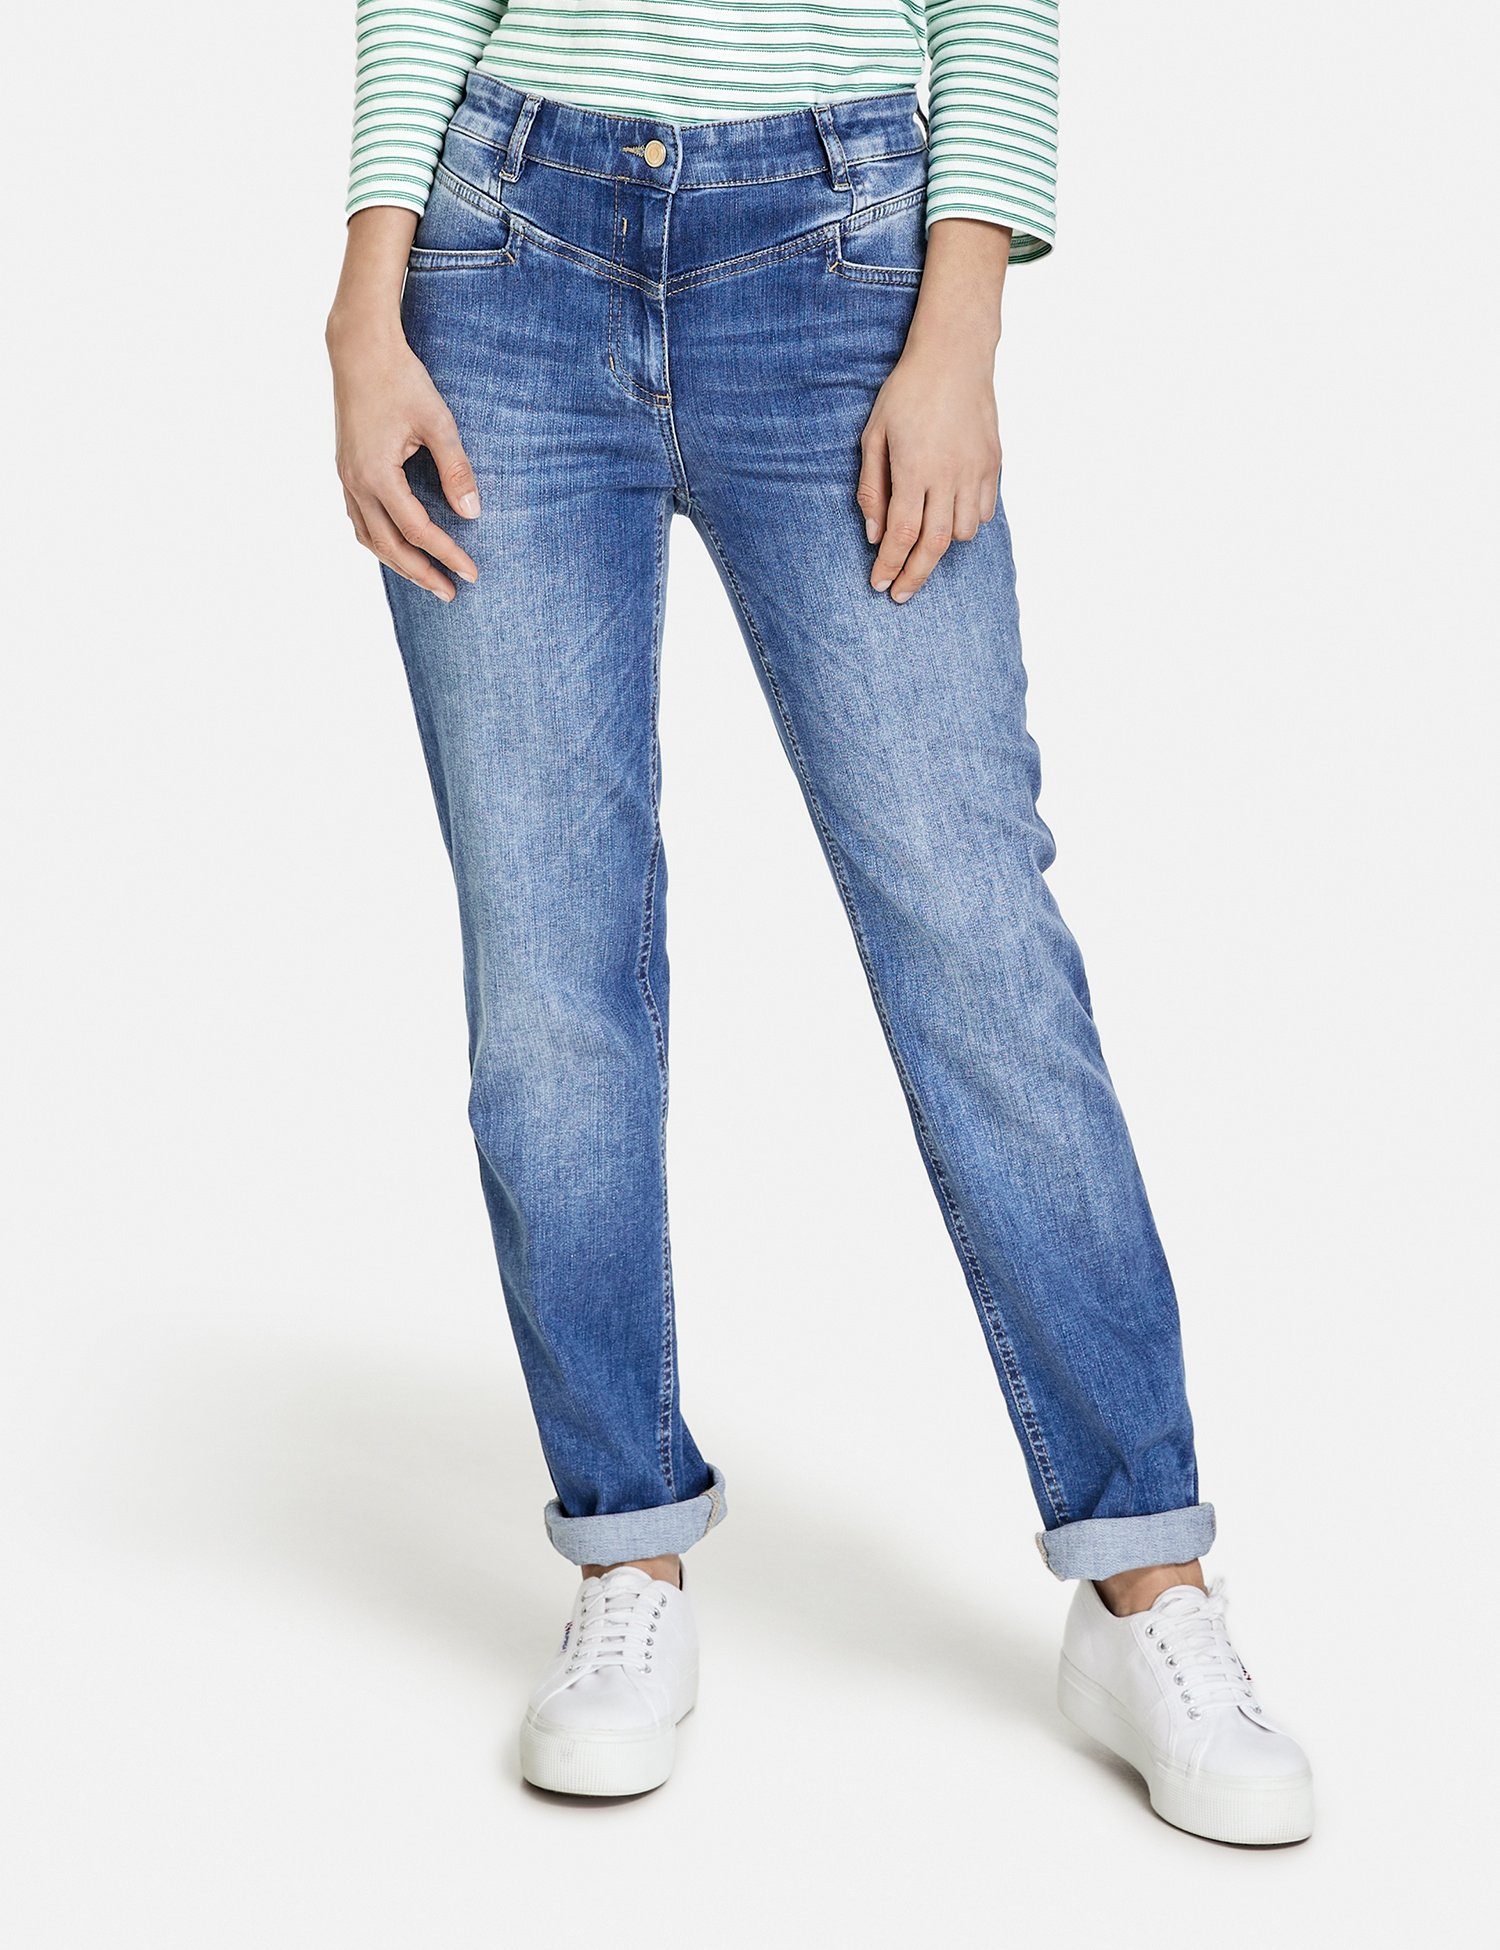 Blue Jeans Denim Kontrastnähten mit GERRY Stoffhose WEBER Perfect4ever